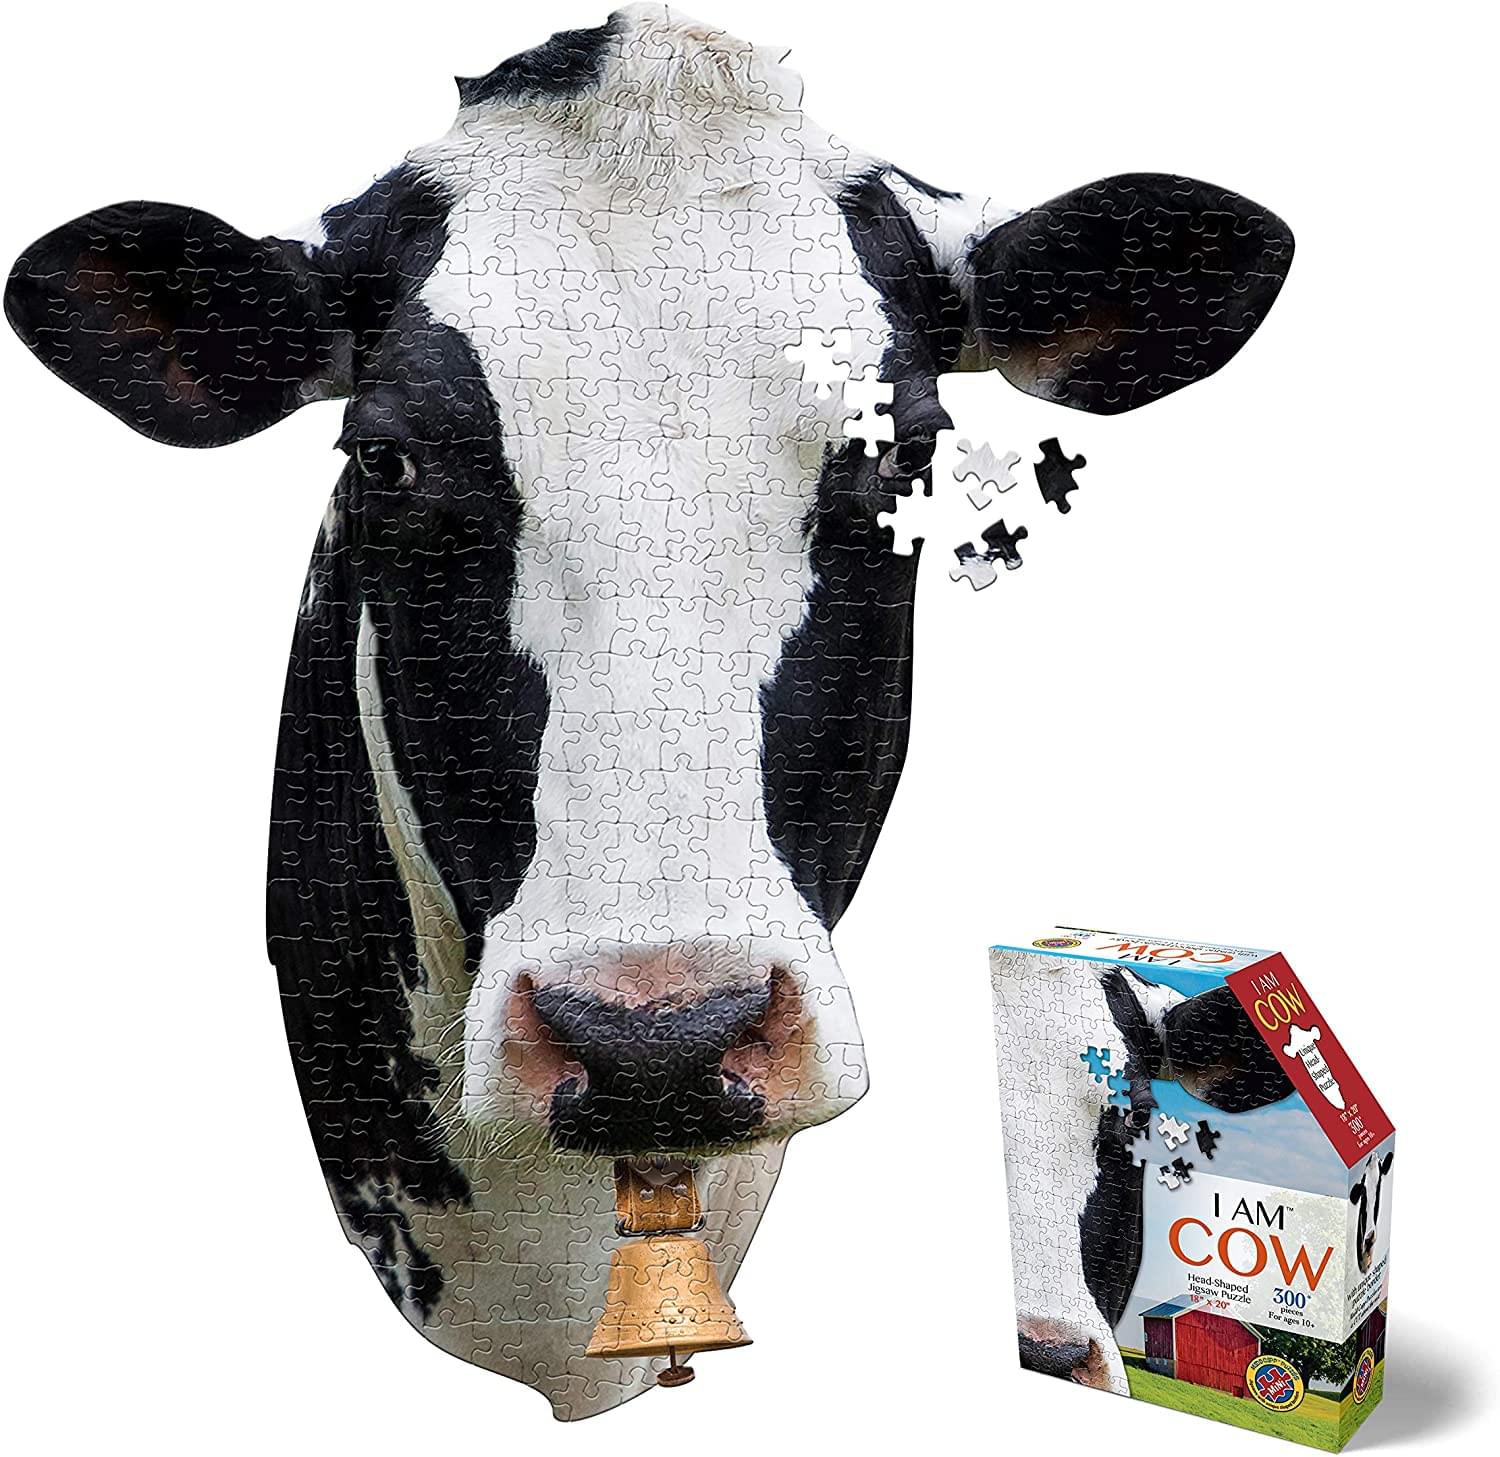 I AM Cow 300 Piece Animal Head-Shaped Jigsaw Puzzle